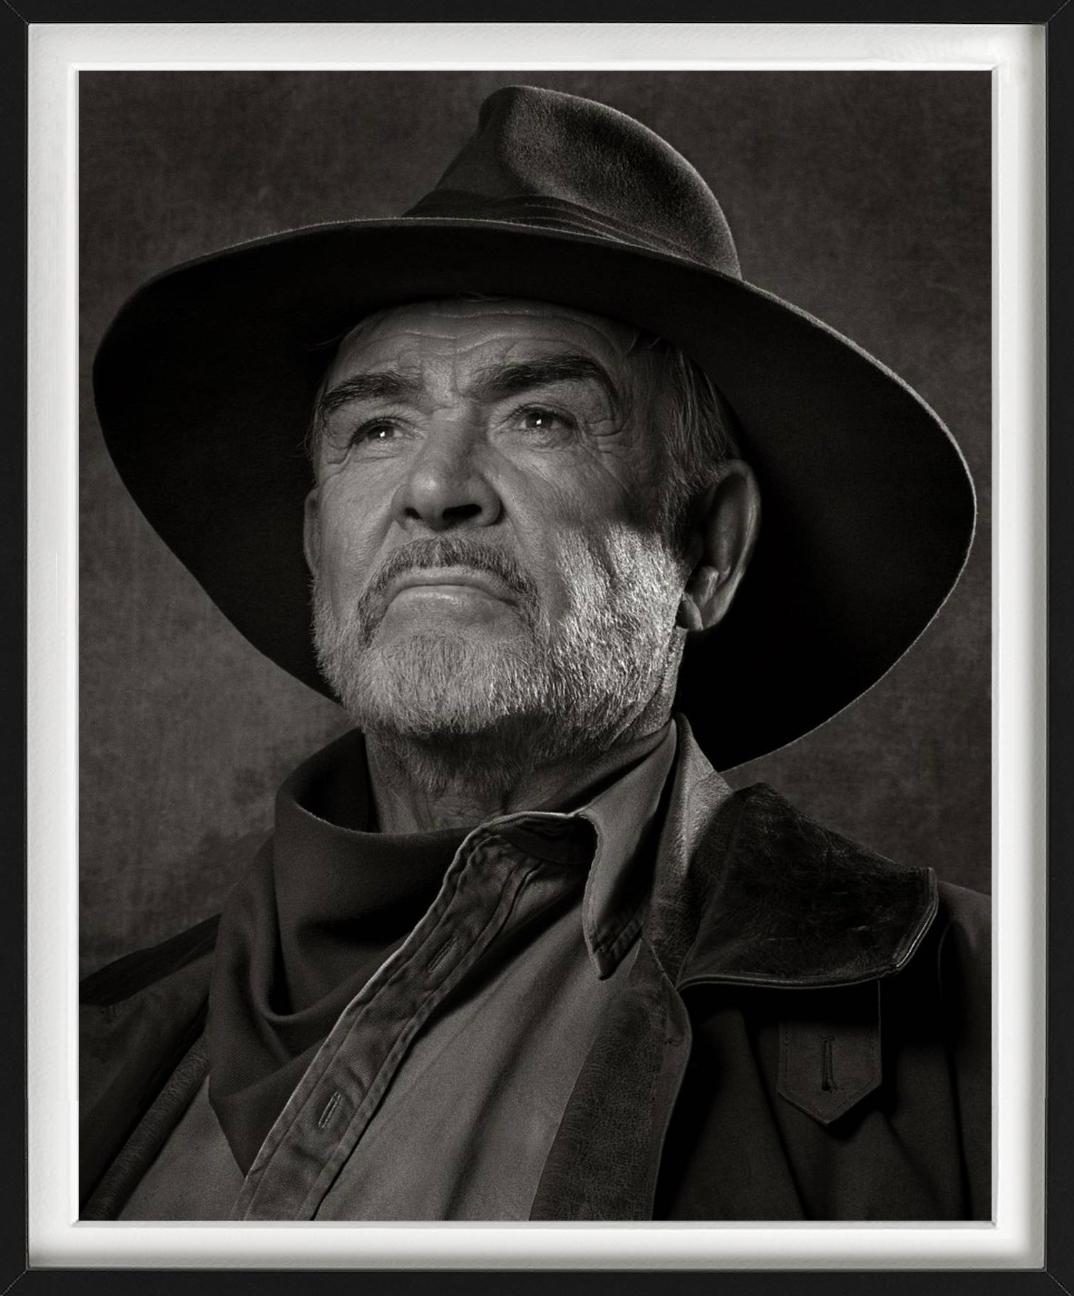 Sean Connery, Prague - portrait with cowboy hat, fine art photography, 2002 - Photograph by Albert Watson